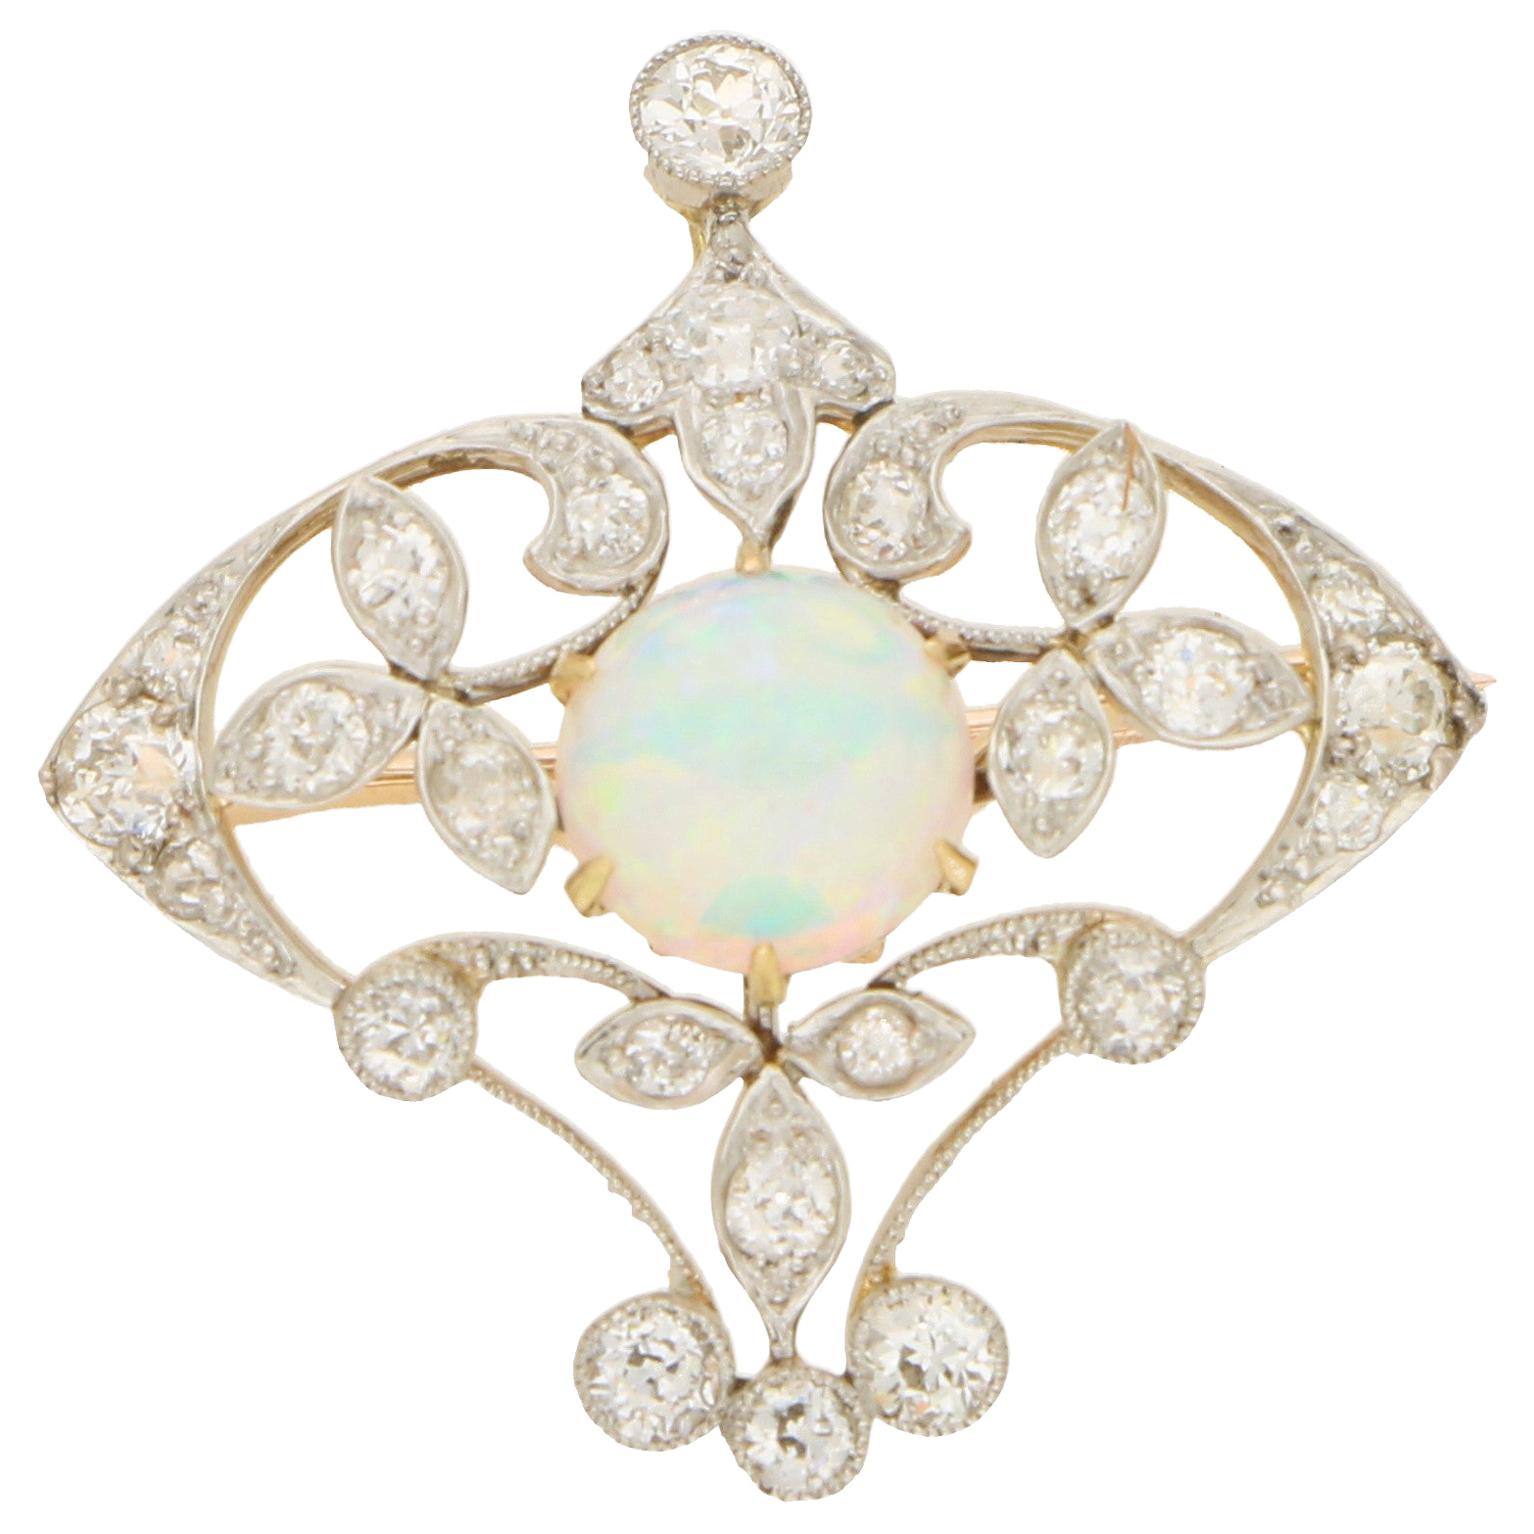 Edwardian Opal and Diamond Pendant/Brooch